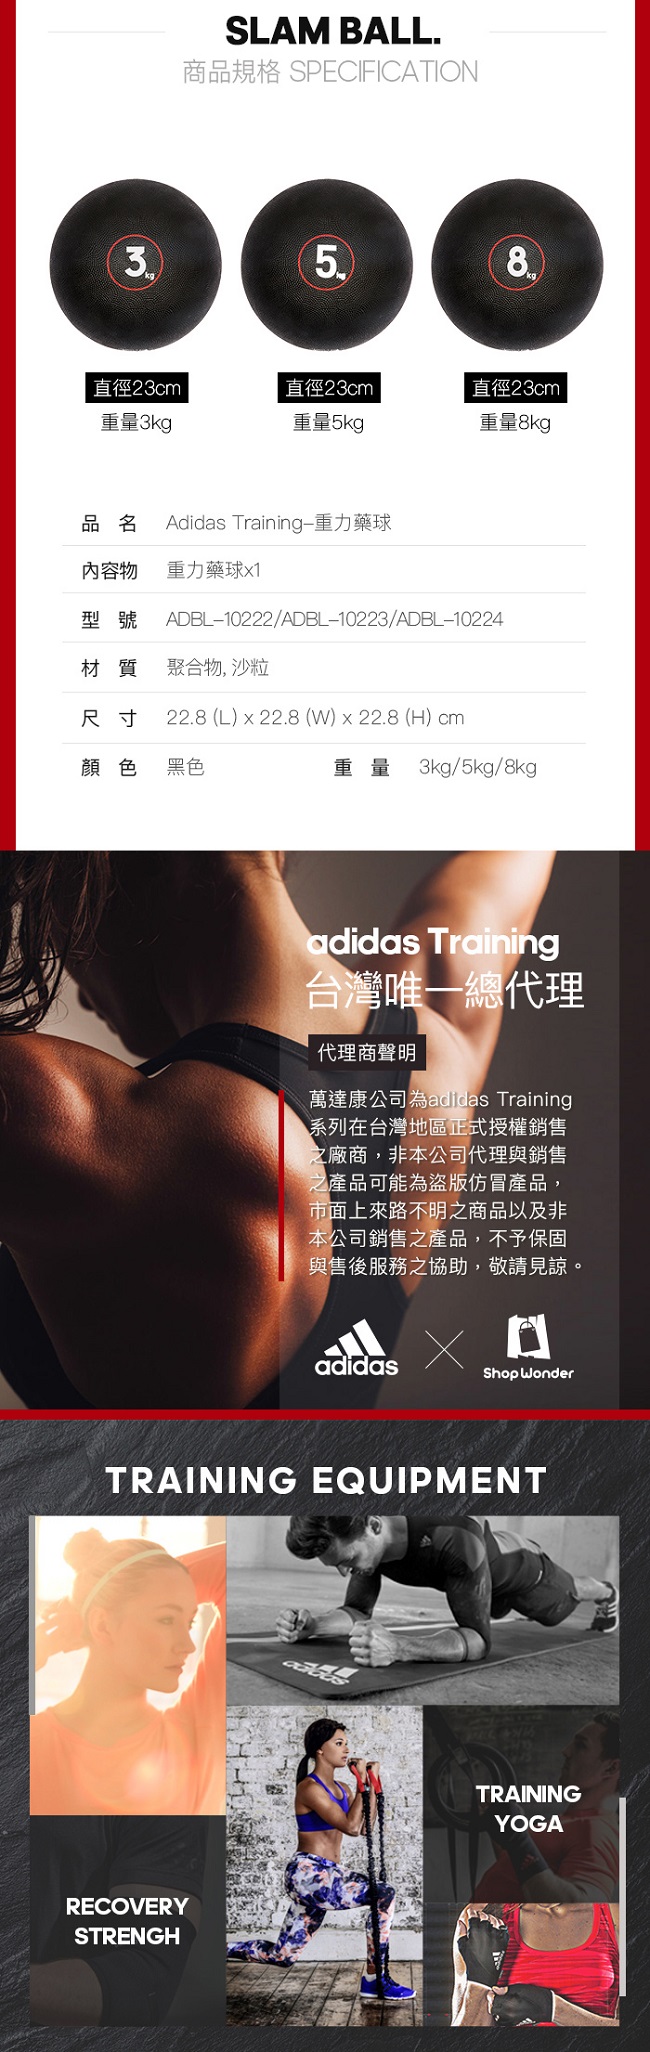 Adidas Training 重力藥球(3kg)